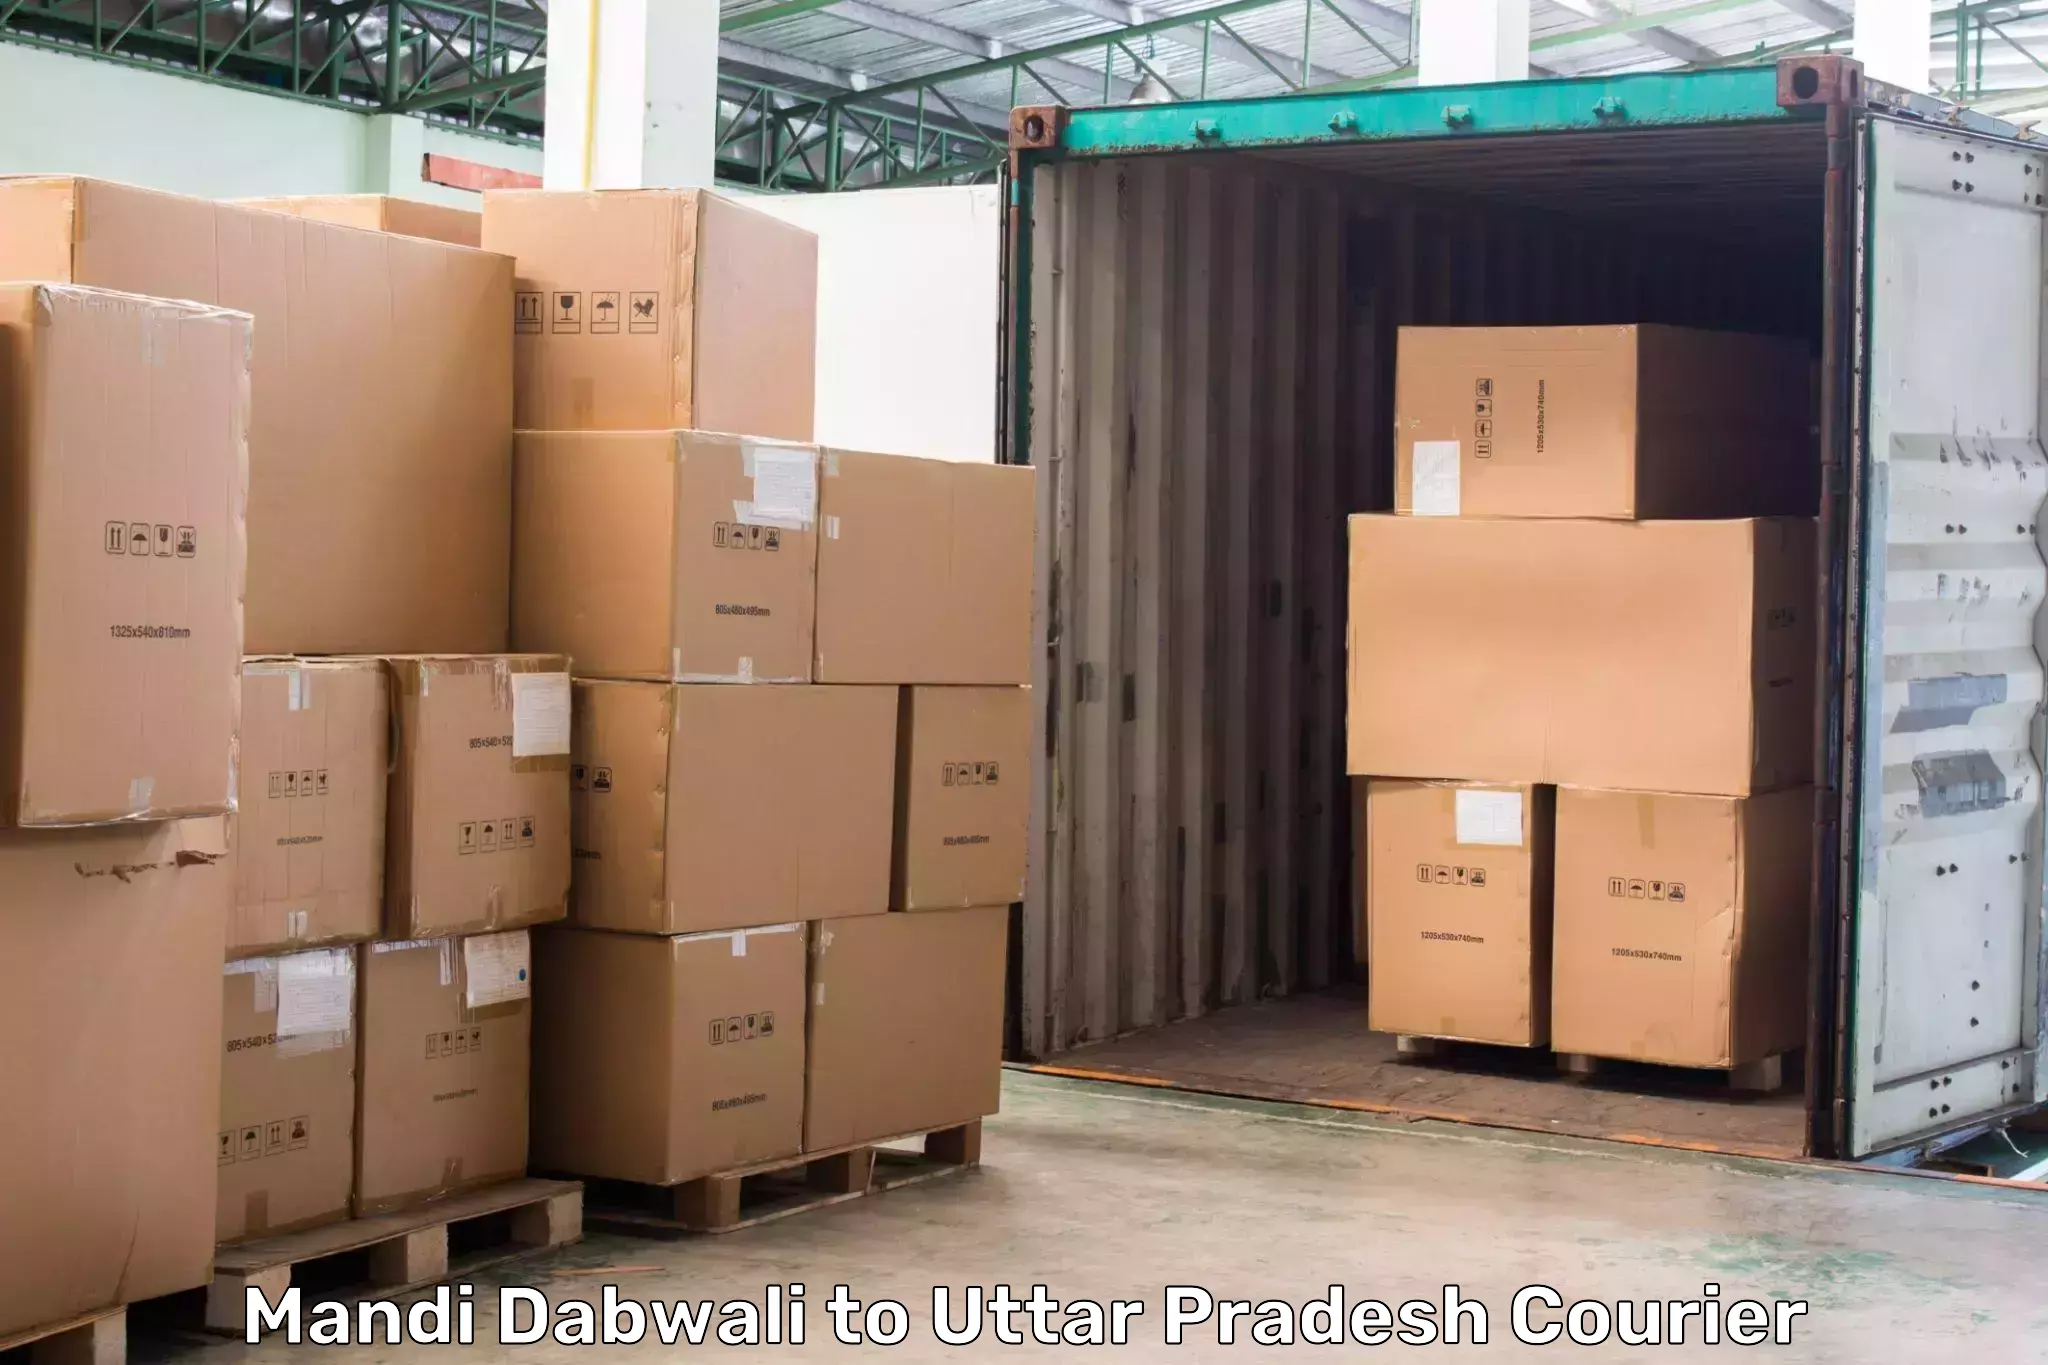 24/7 courier service in Mandi Dabwali to Dadri